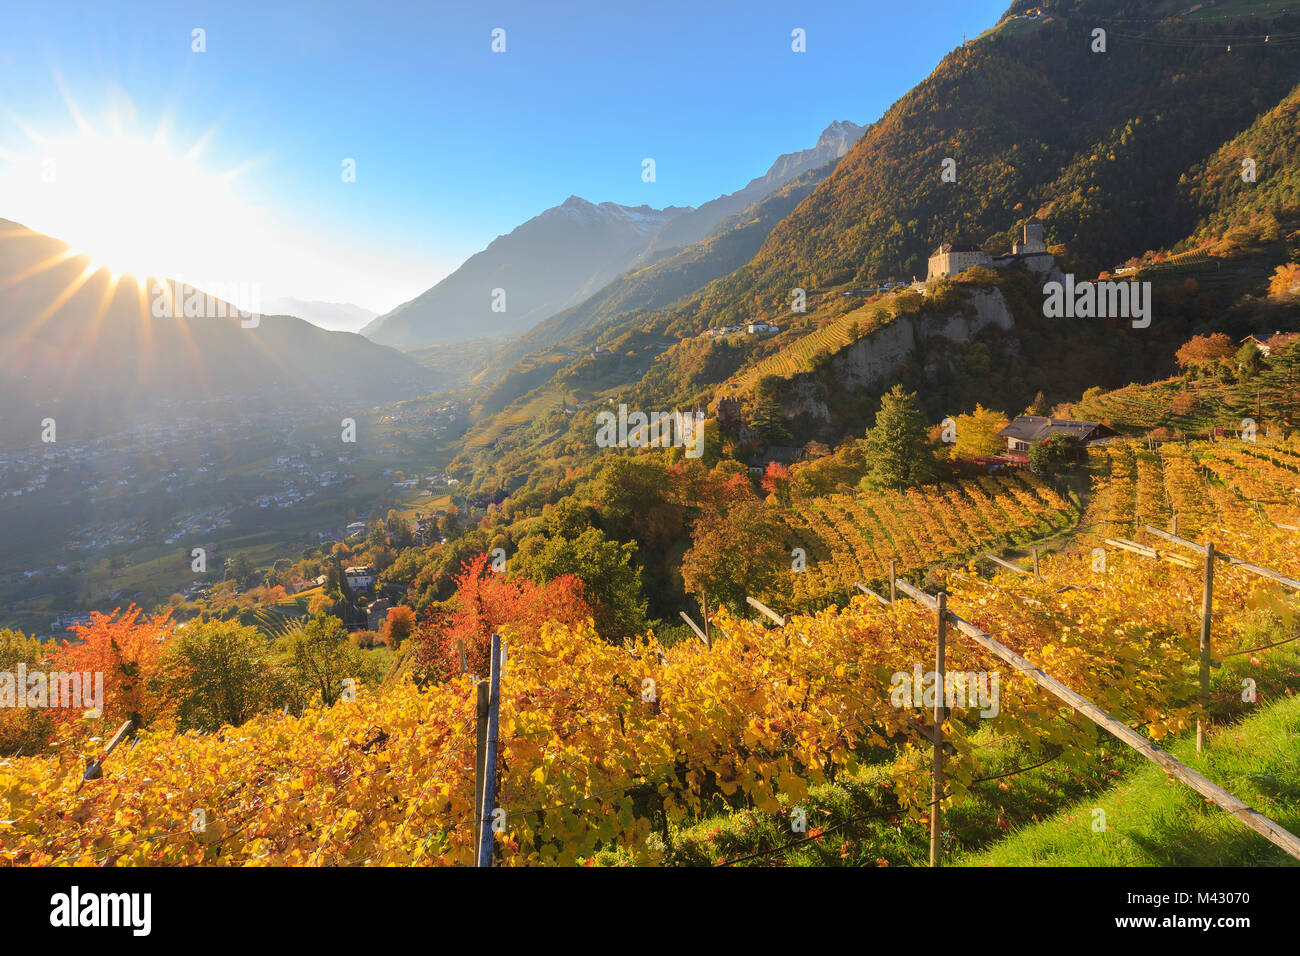 The sun illuminates Castel Tirolo and Castel Fontana before setting off. Castel Tirolo, Tirolo, Merano, Val Venosta, Alto Adige/Sudtirol, Italy, Europ Stock Photo